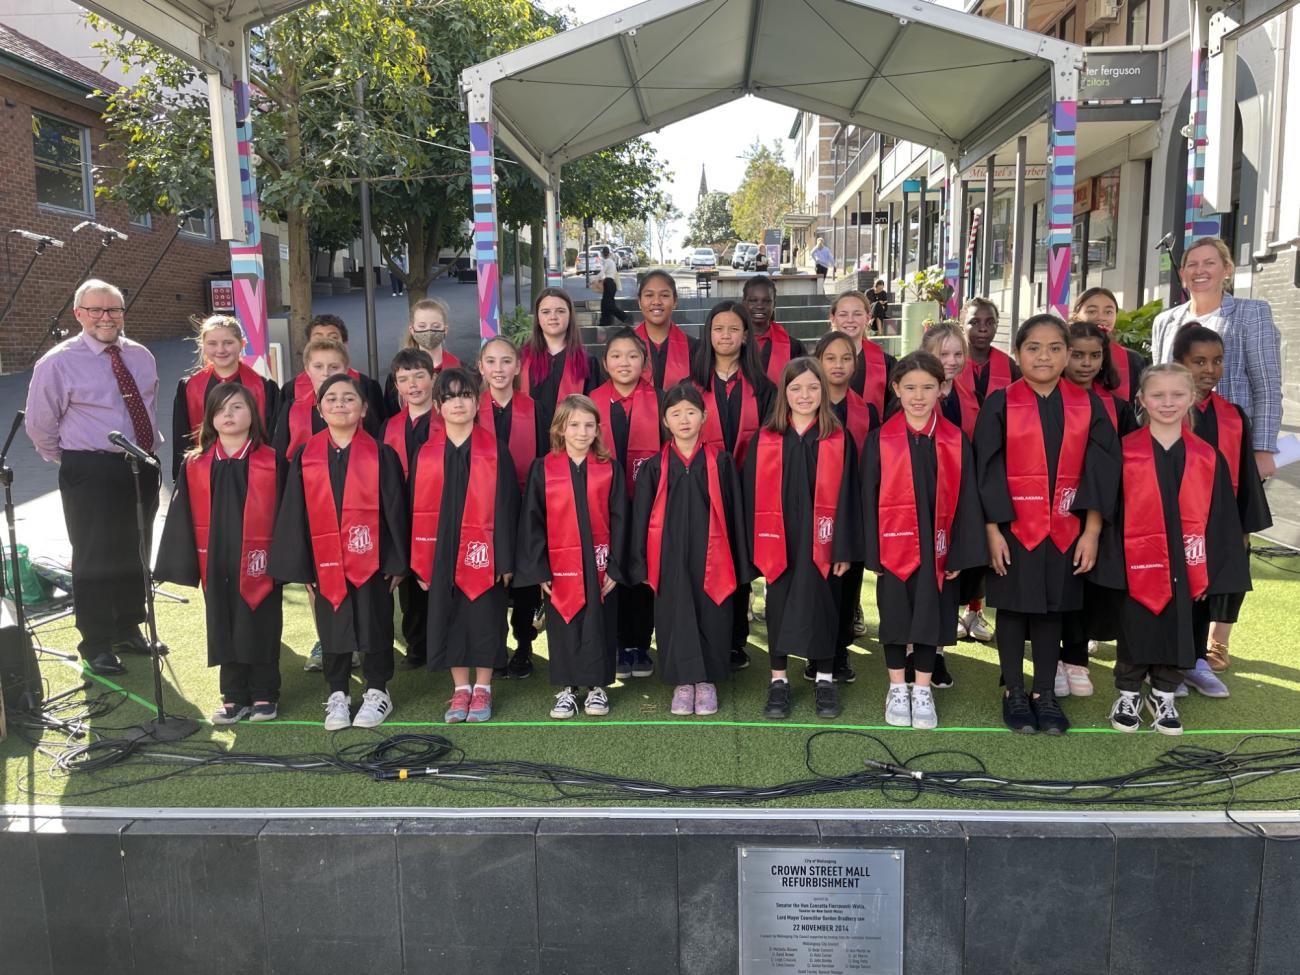 Kemblawarra Public School Choir standing in front of the stage in school uniform for photo